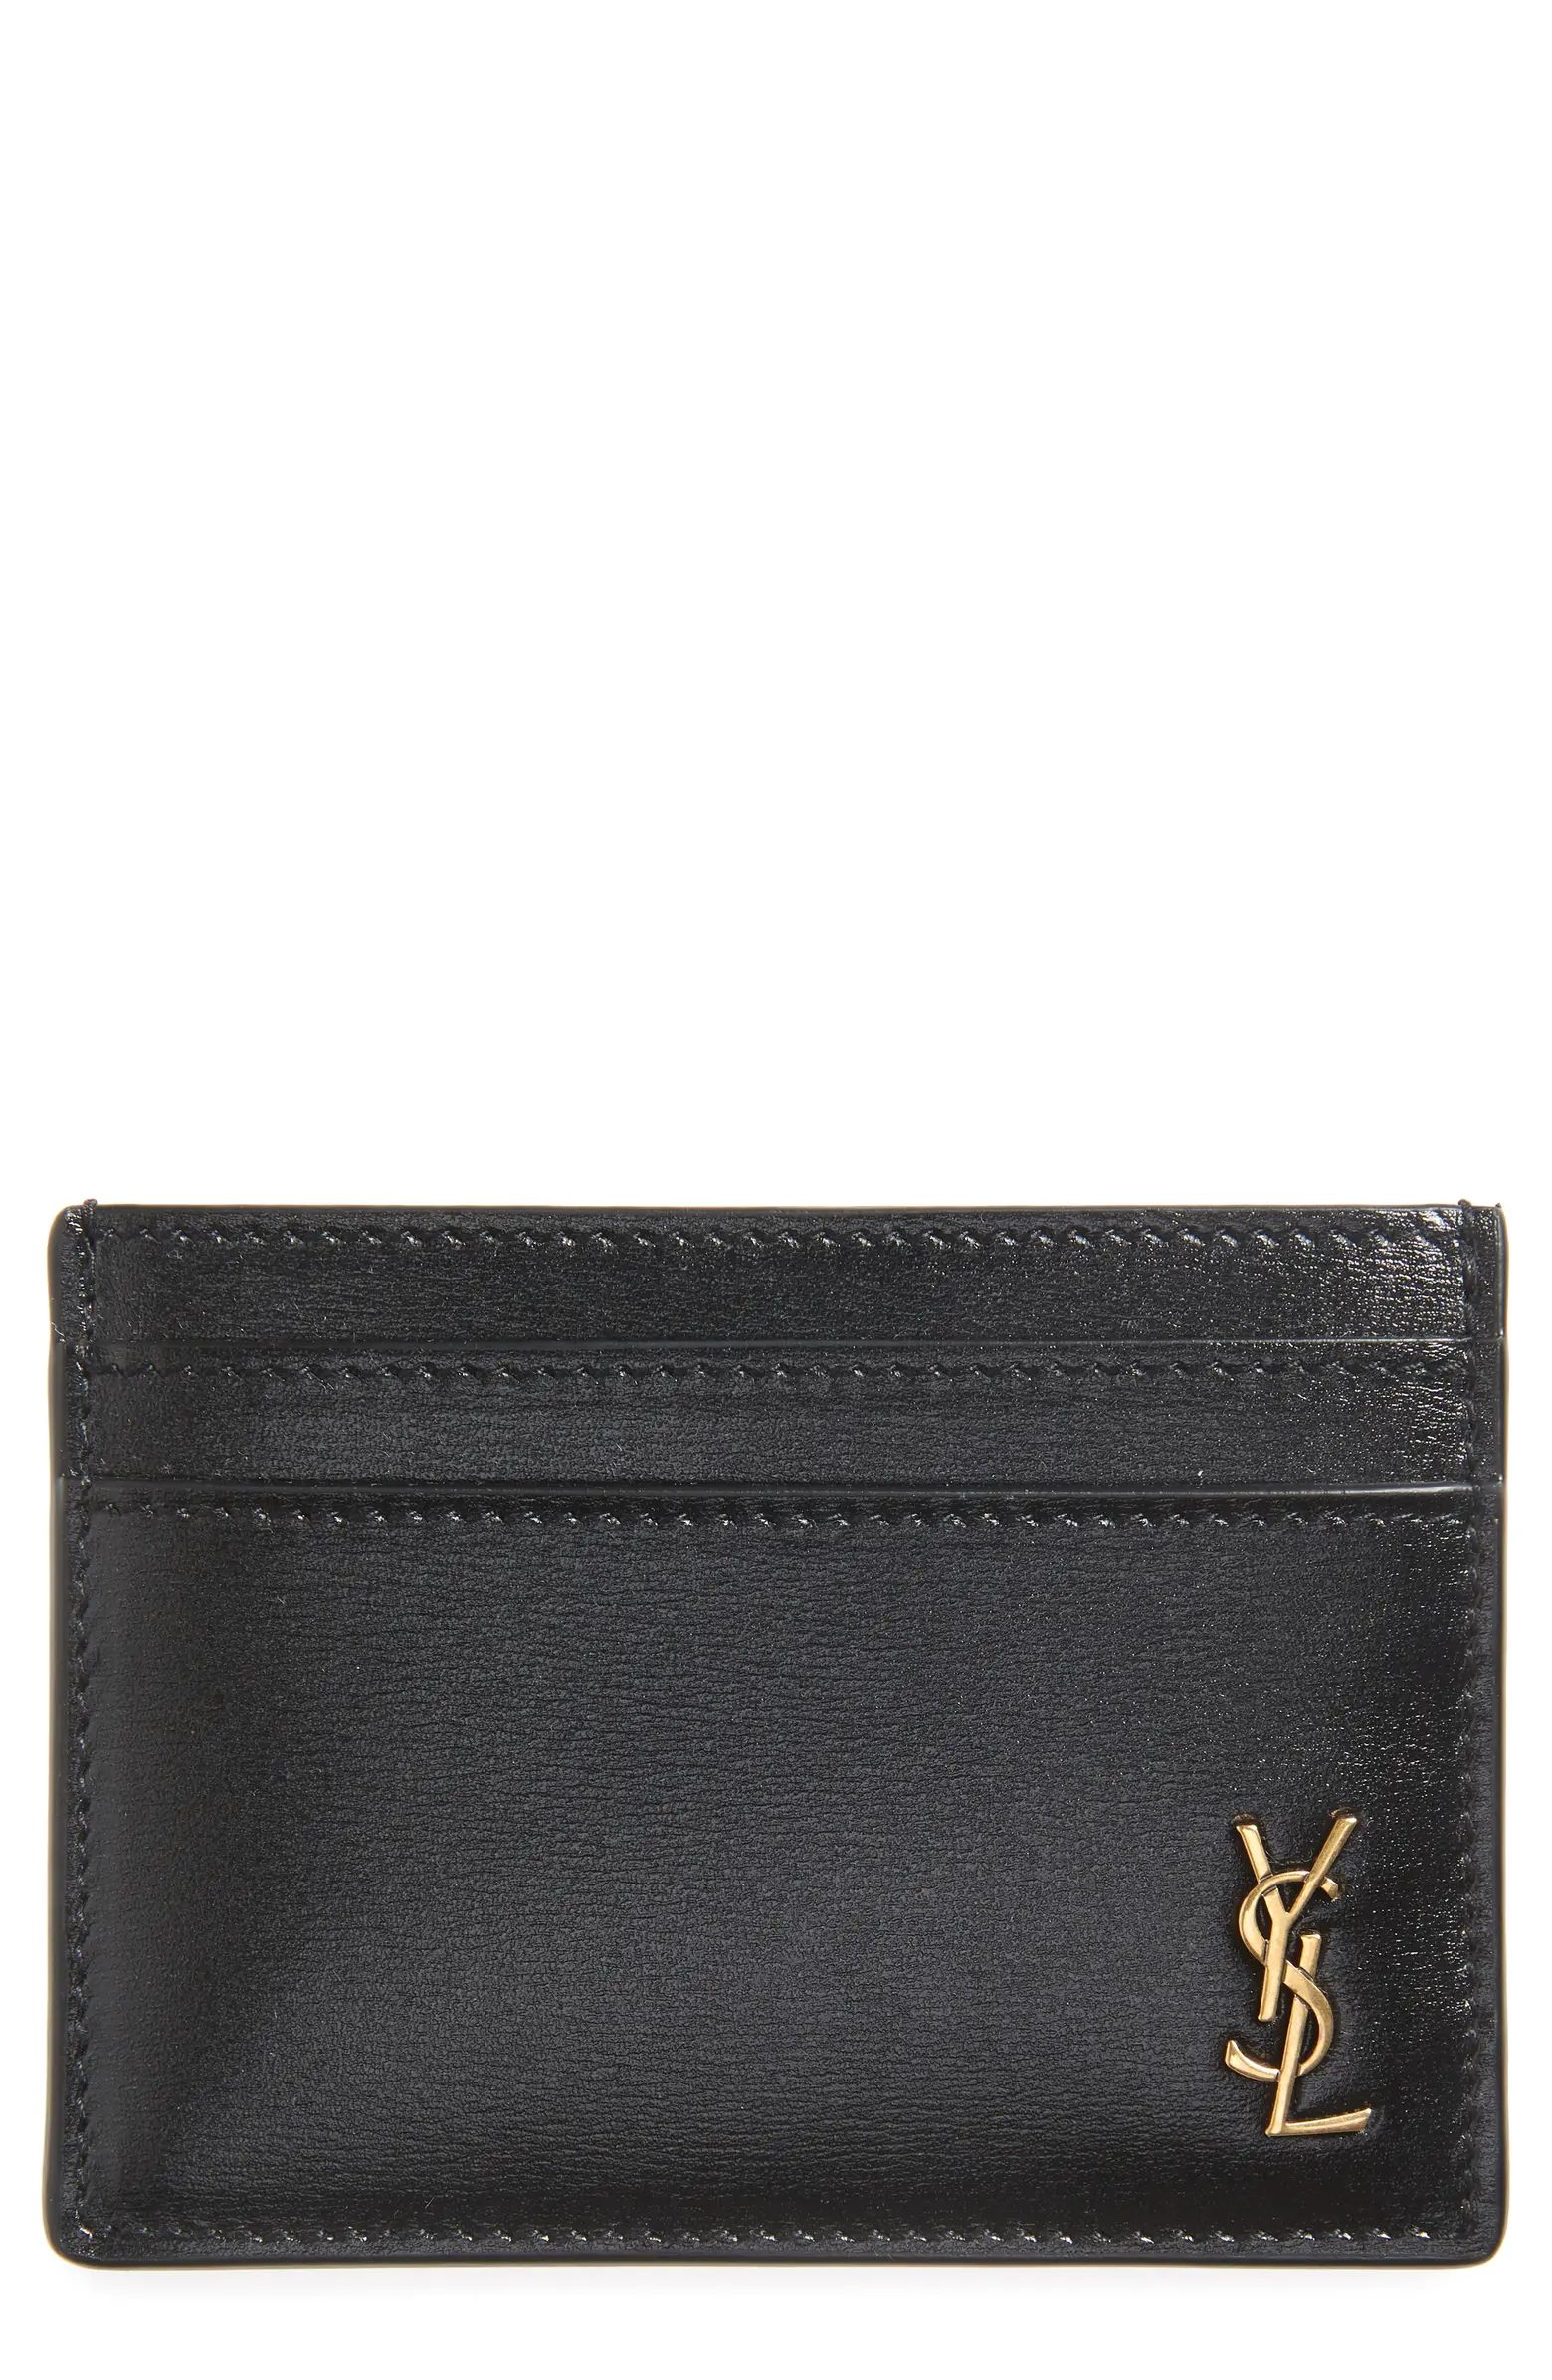 YSL Monogram Leather Card Case | Nordstrom